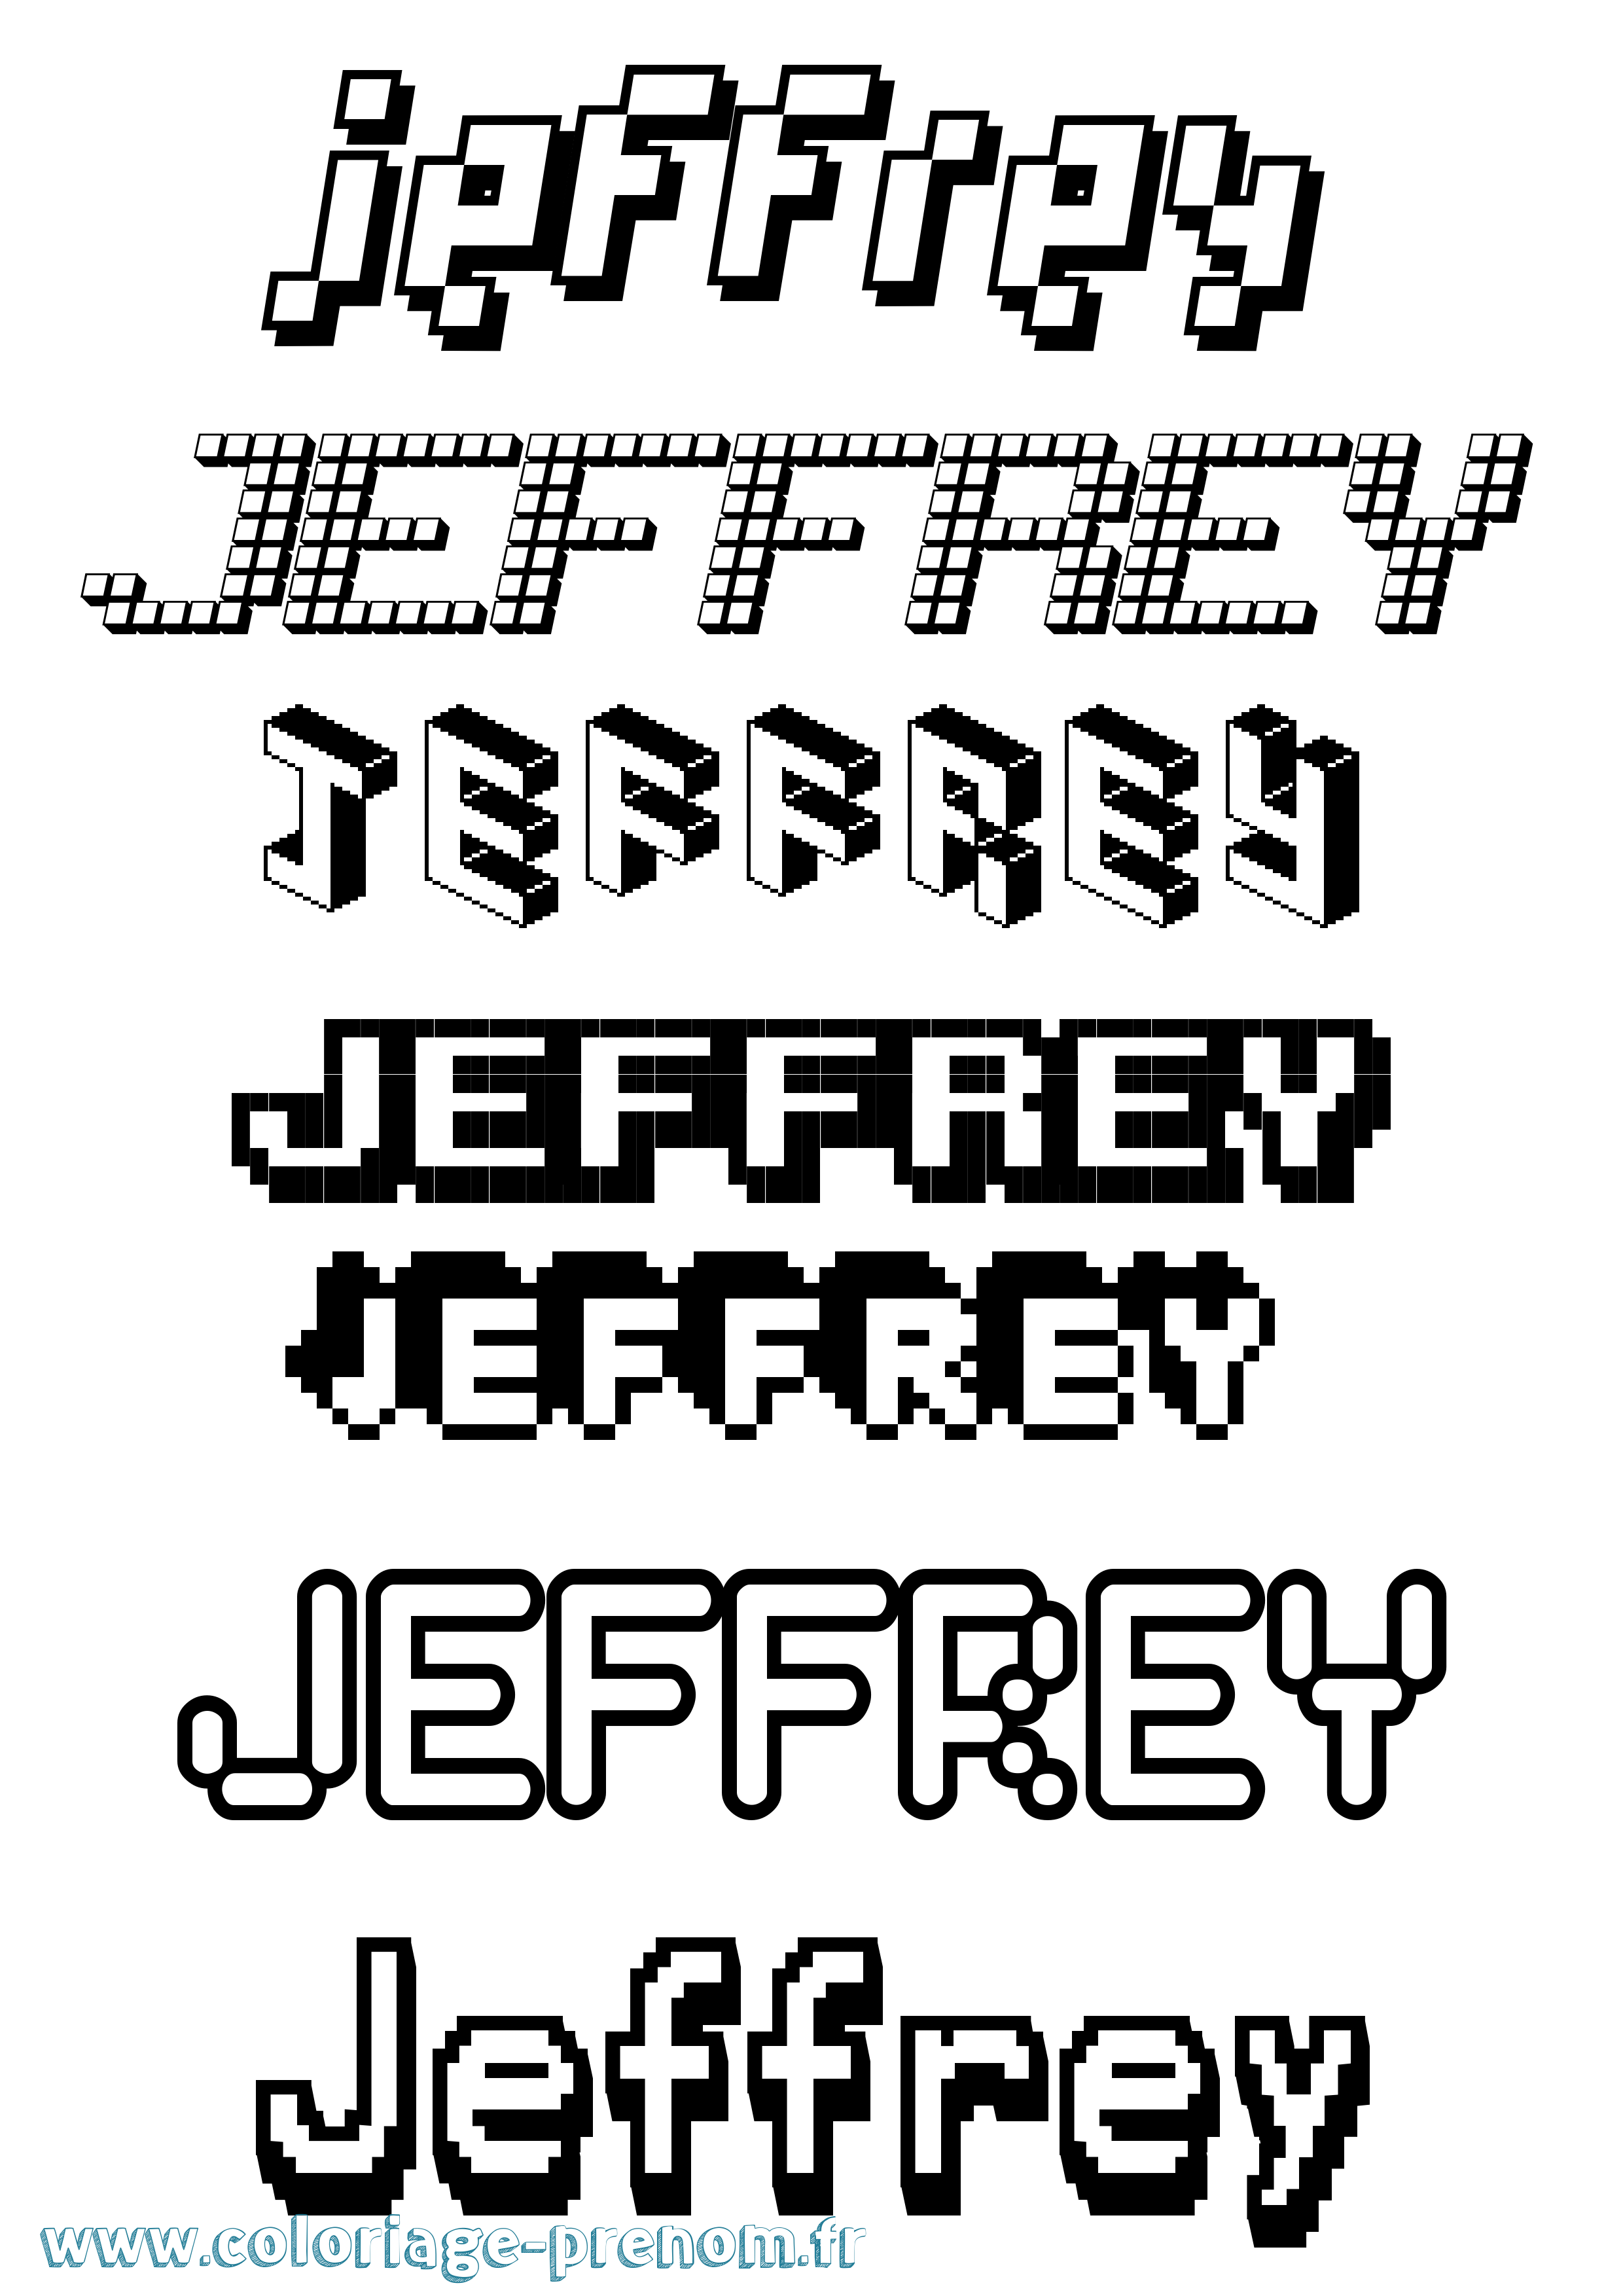 Coloriage prénom Jeffrey Pixel